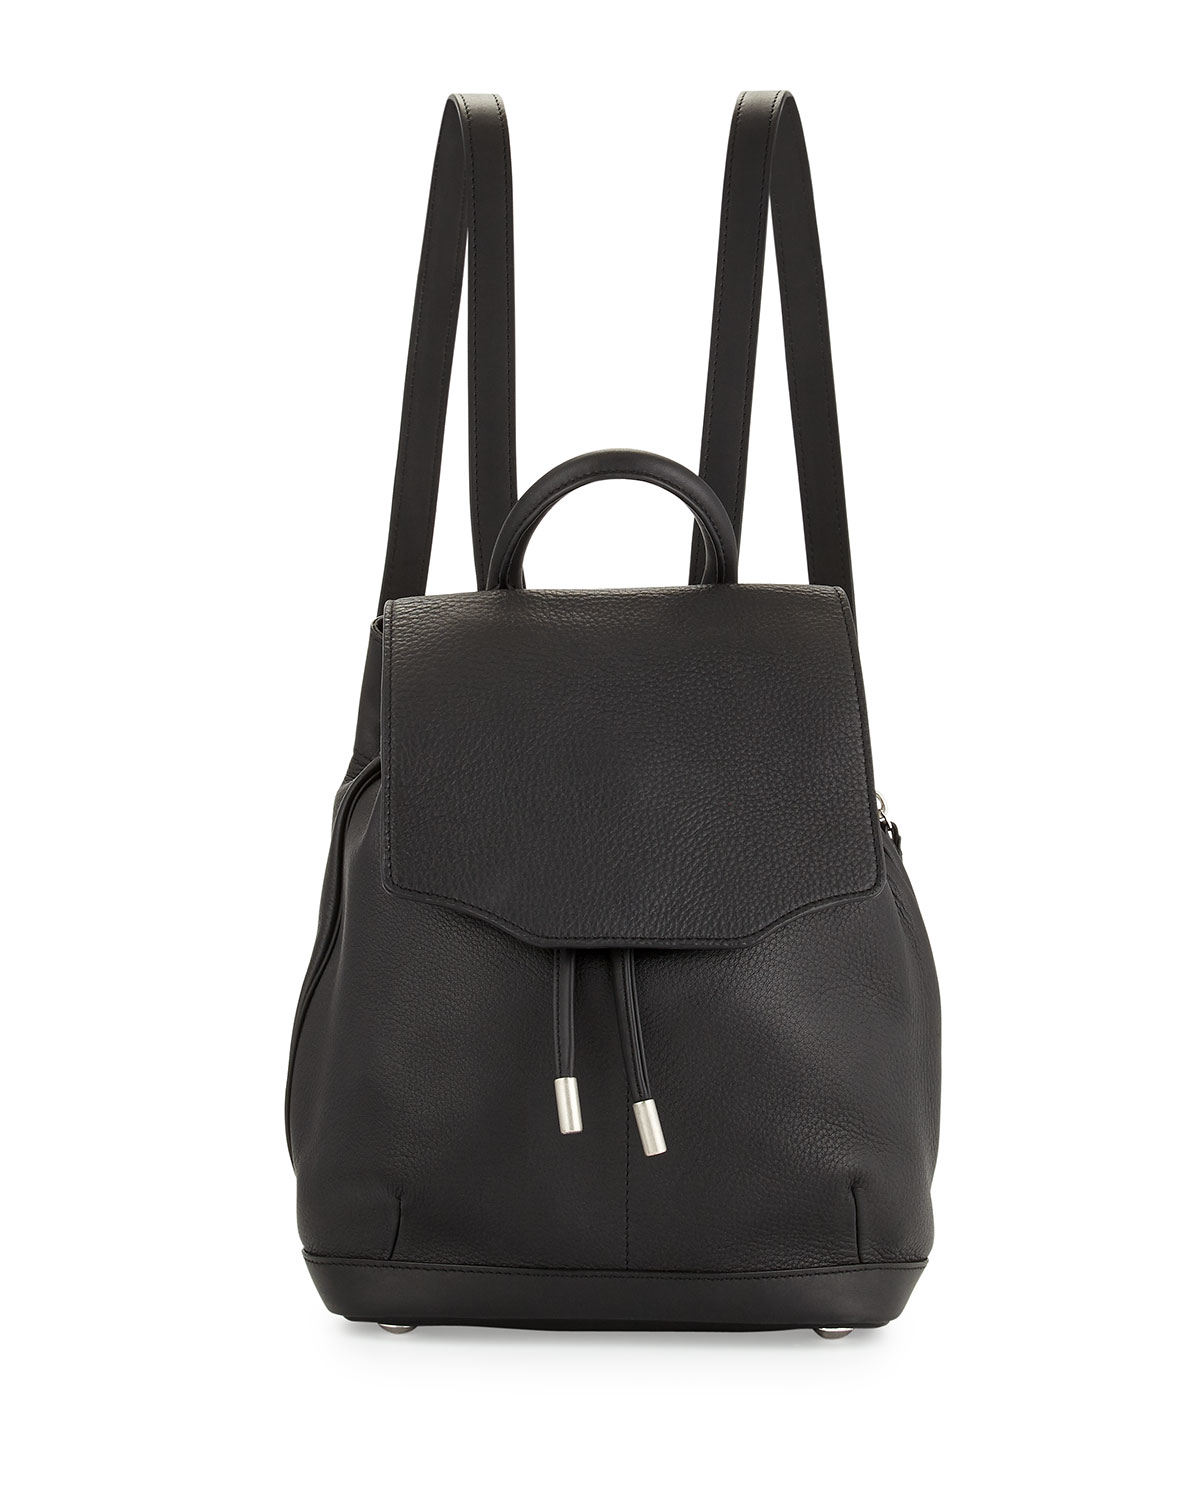 Lyst - Rag & Bone Pilot Mini Leather Backpack in Black